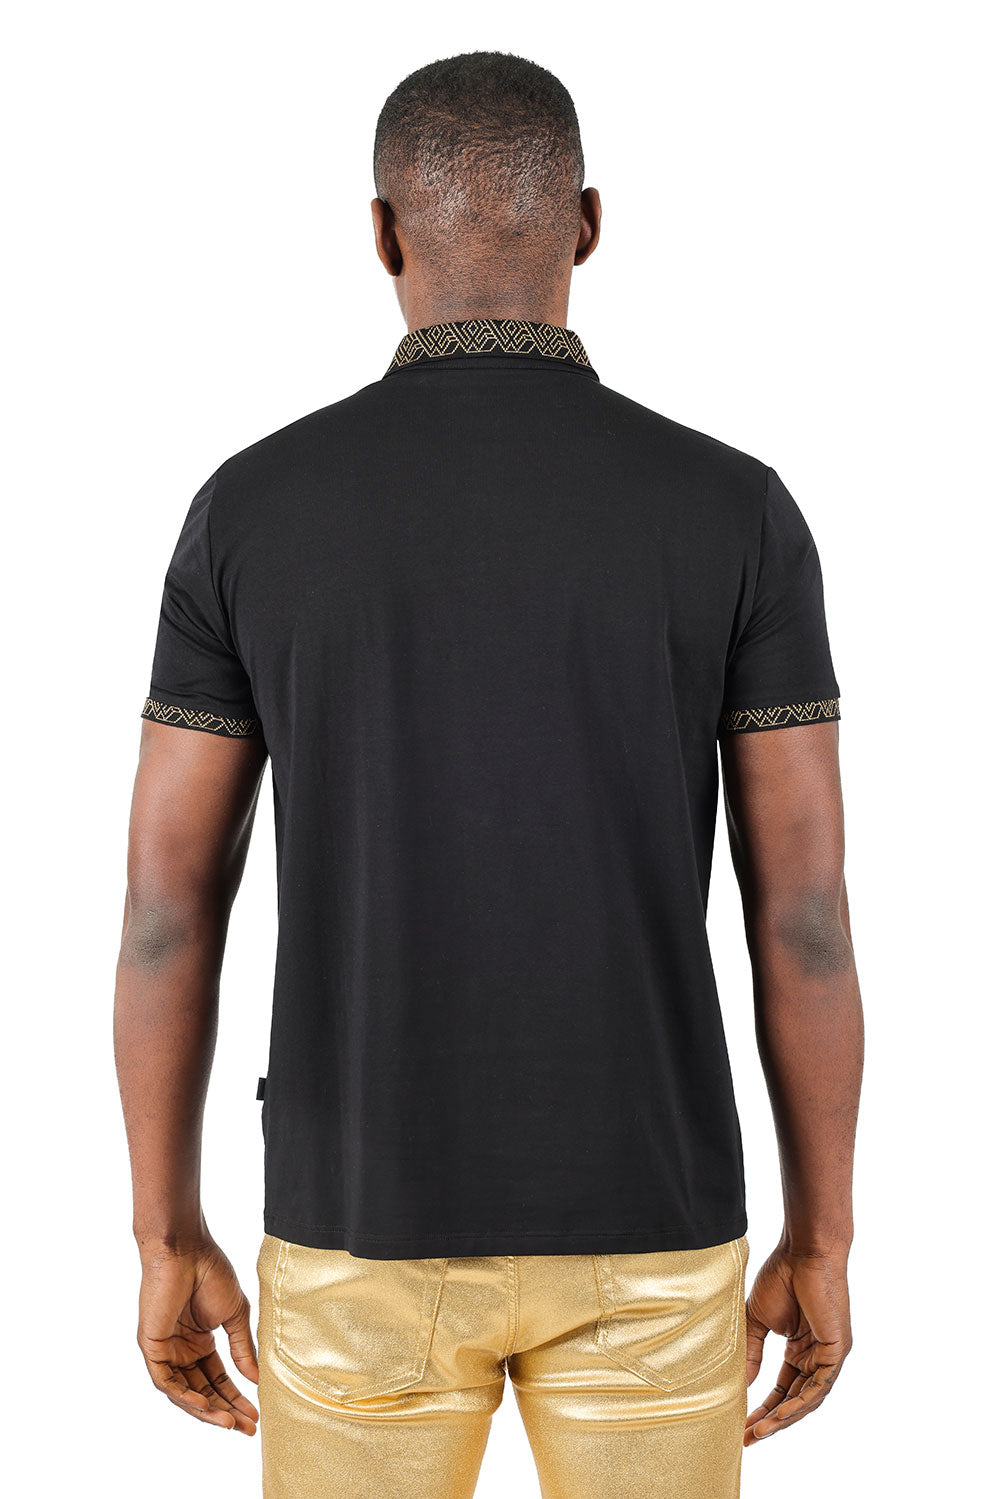 Barabas Men's Collar Pattern Short Sleeve Solid Color Shirts 3P01 Black Gold